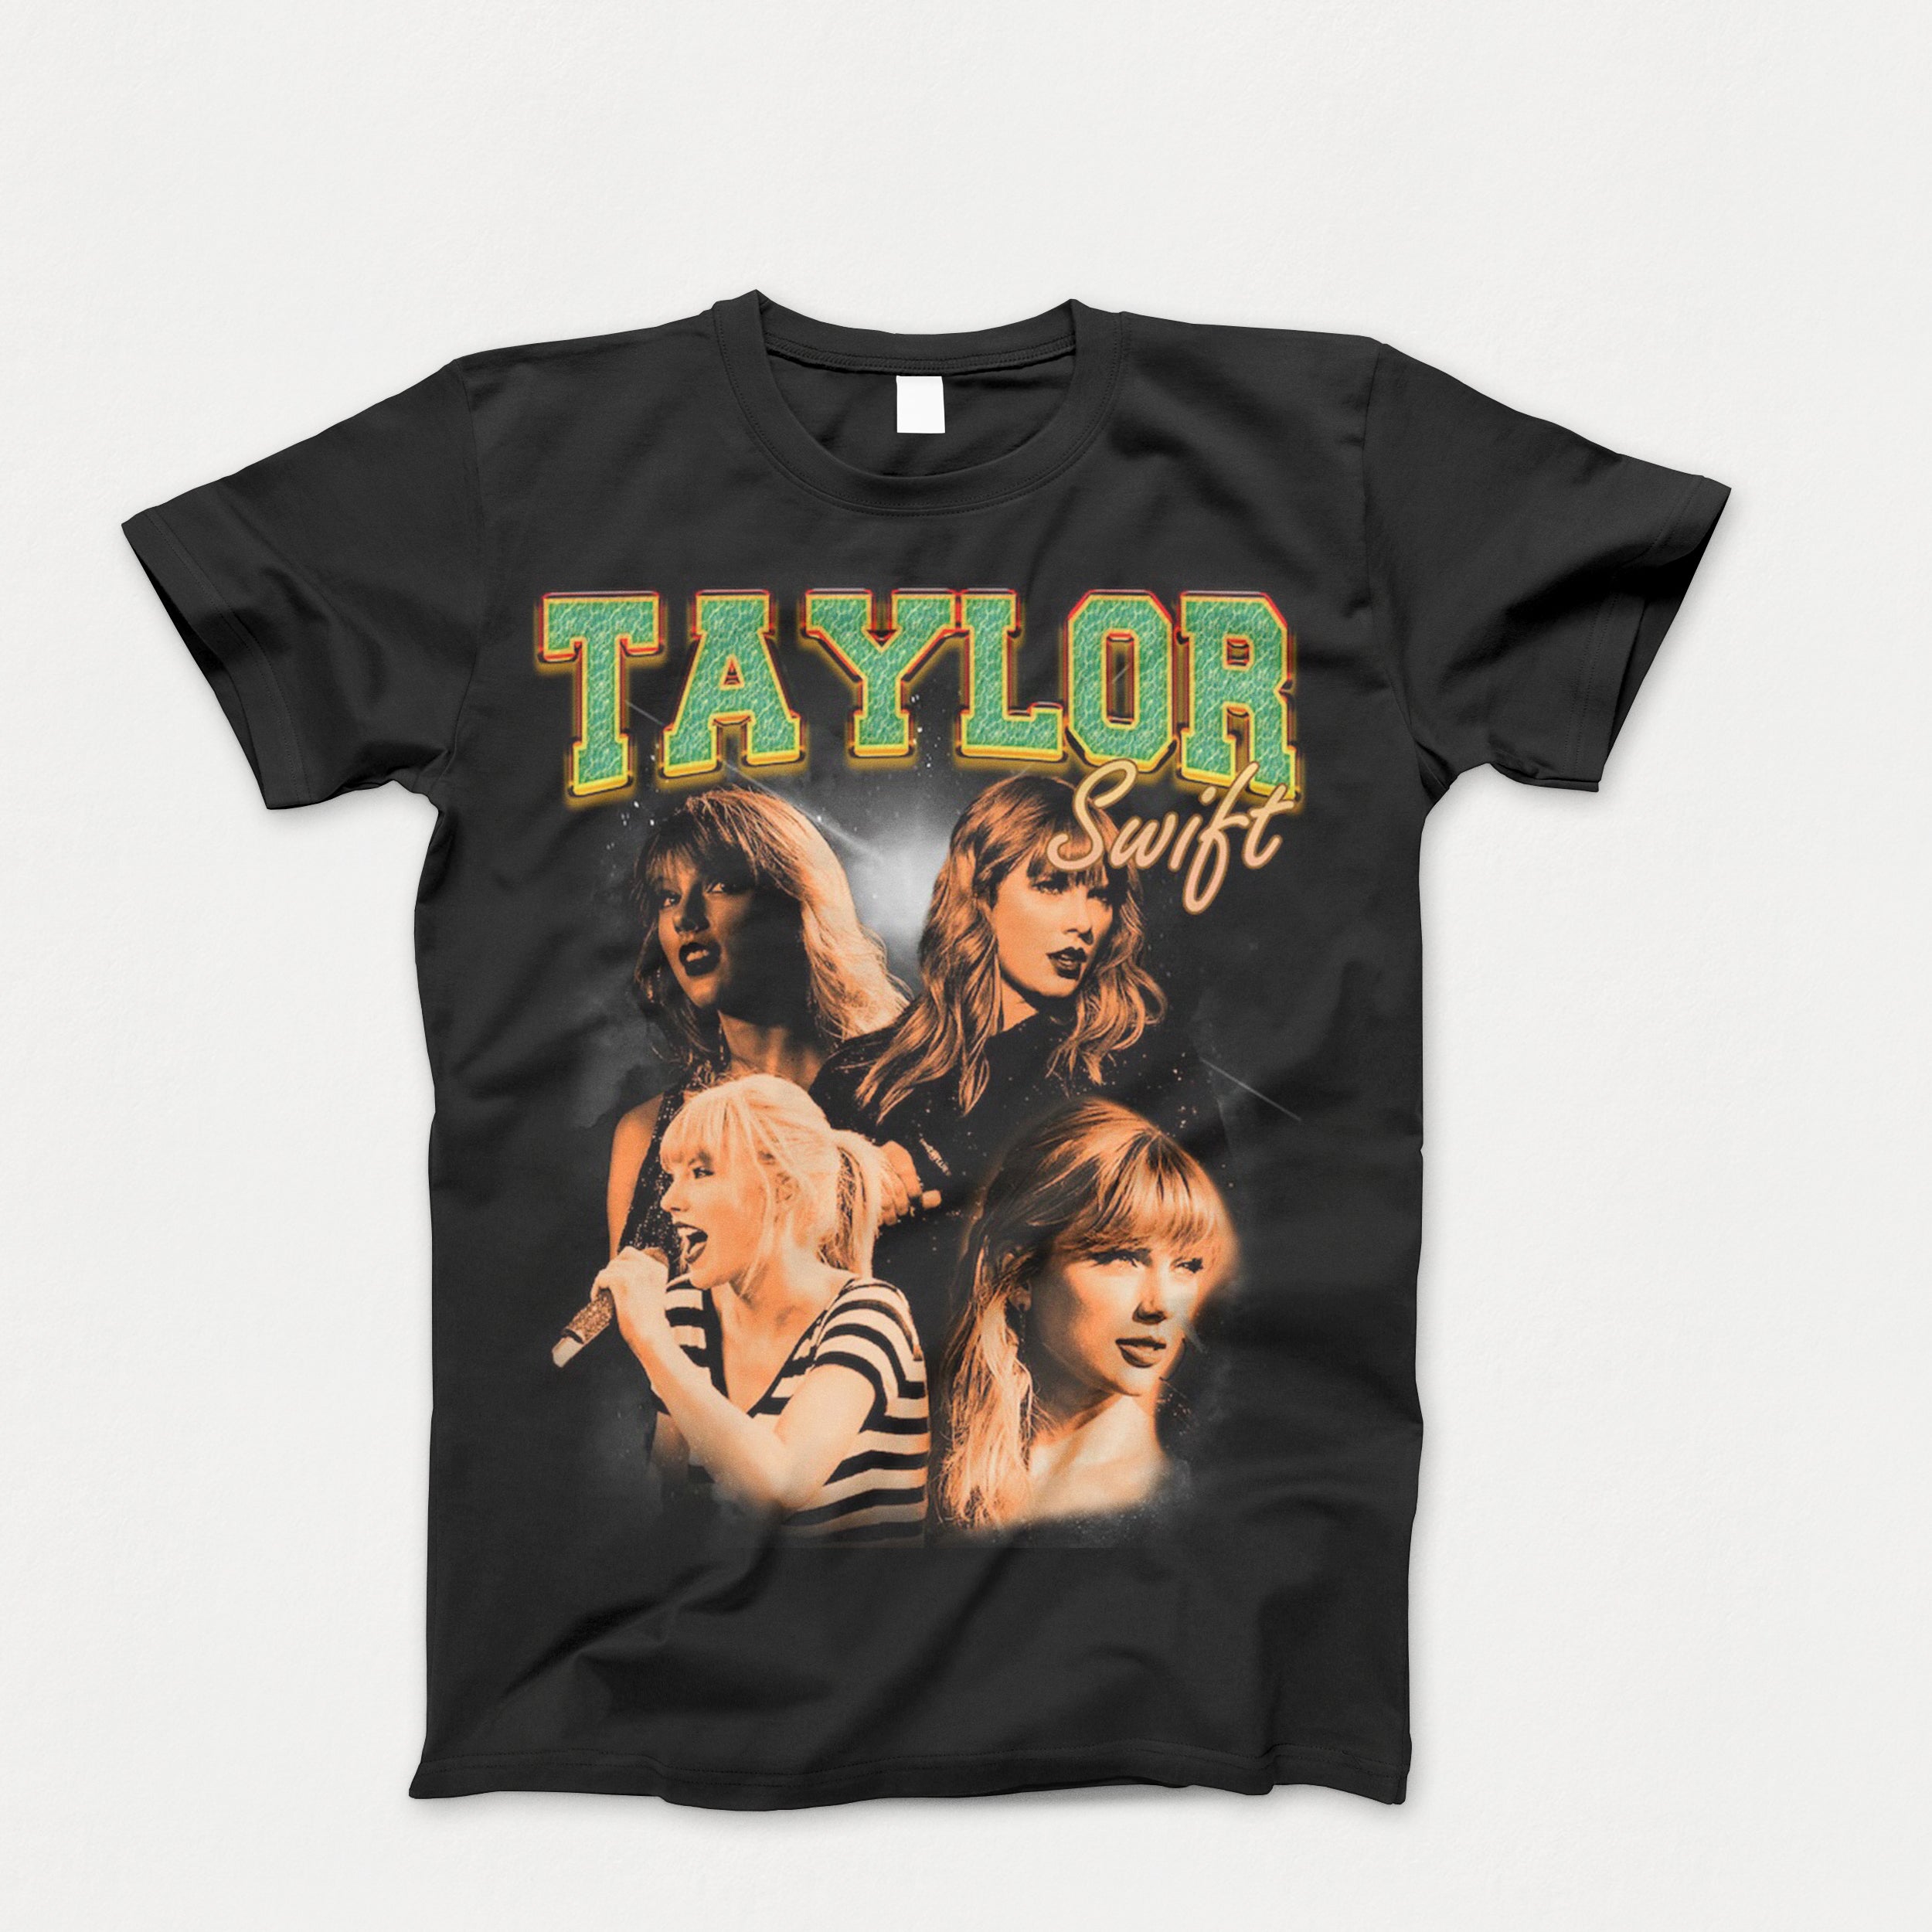 Unisex Adult Taylor Swift Tee Shirt